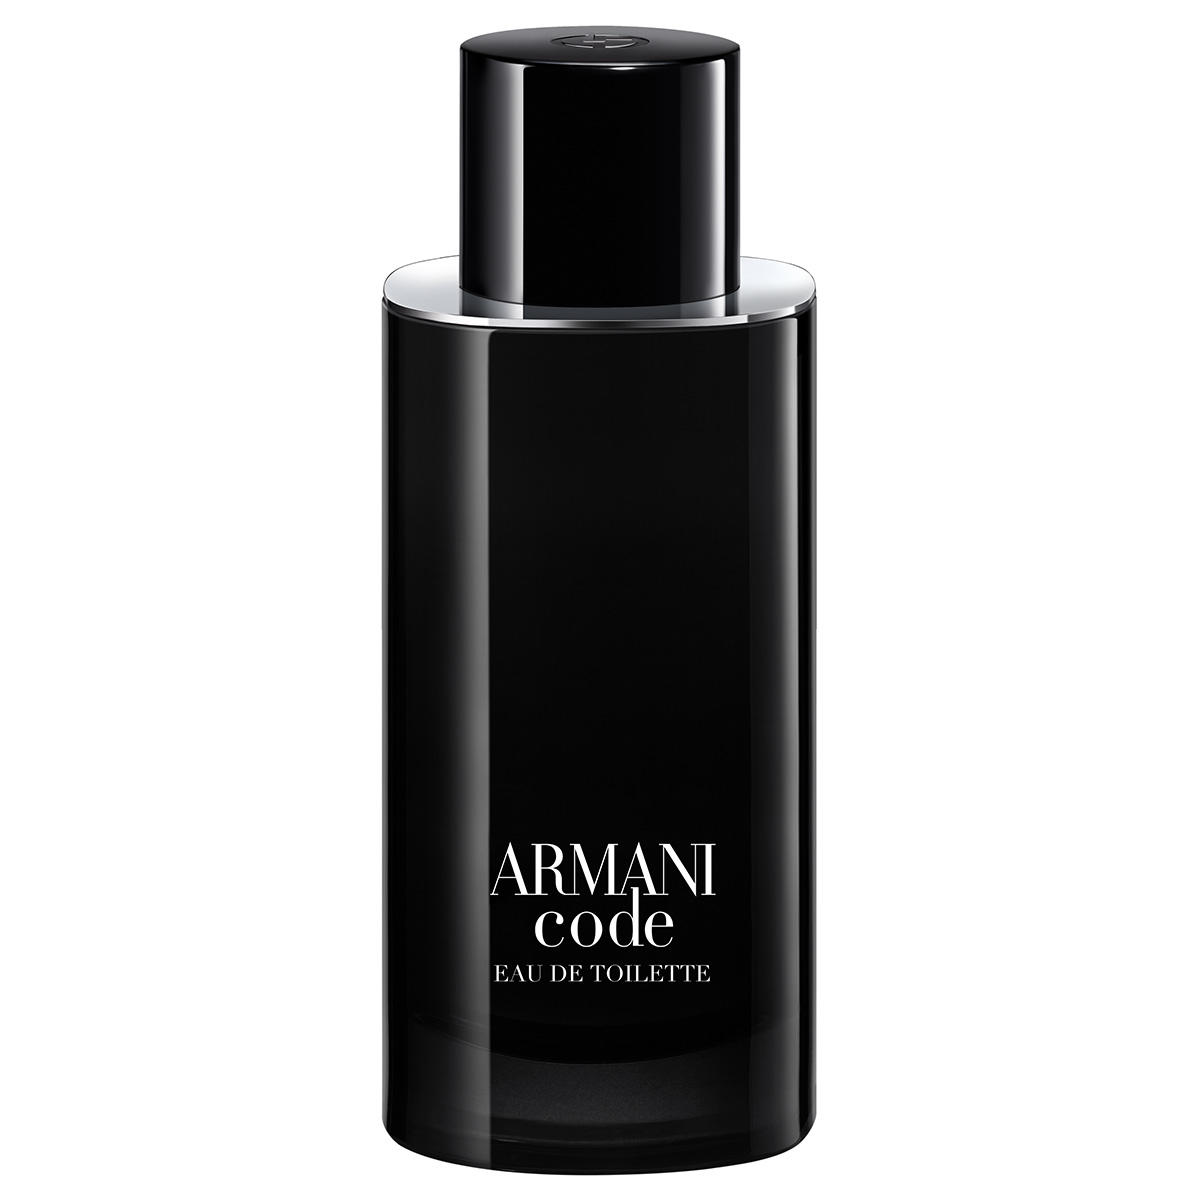 Giorgio Armani Armani Code Eau de Parfum Refillable 125 ml